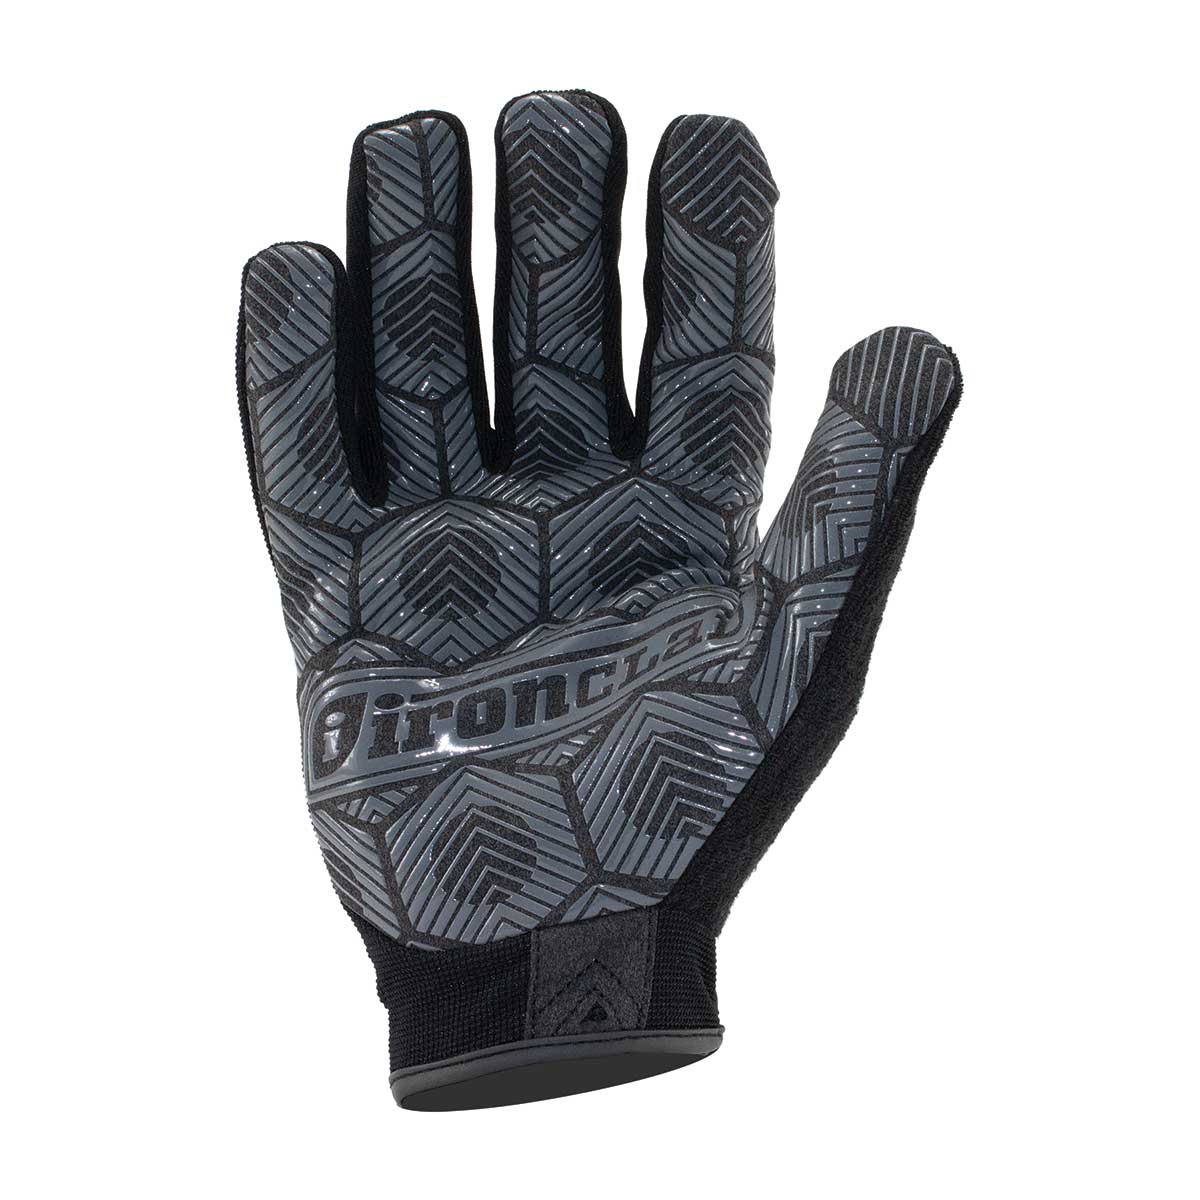 Ironclad Grip Glove